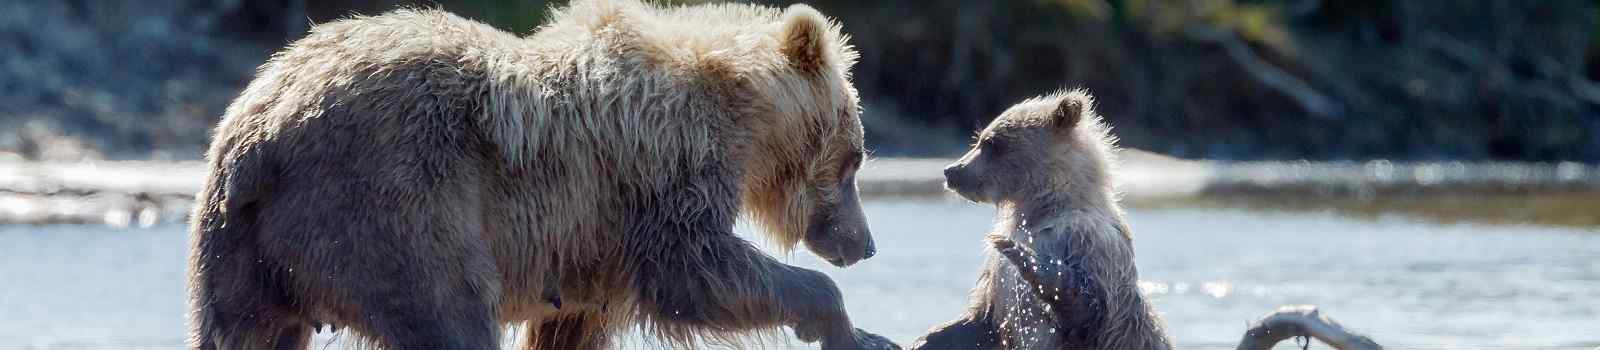 WALE-BEAR-VANC Brown bear female and her cub shutterstock 421064782